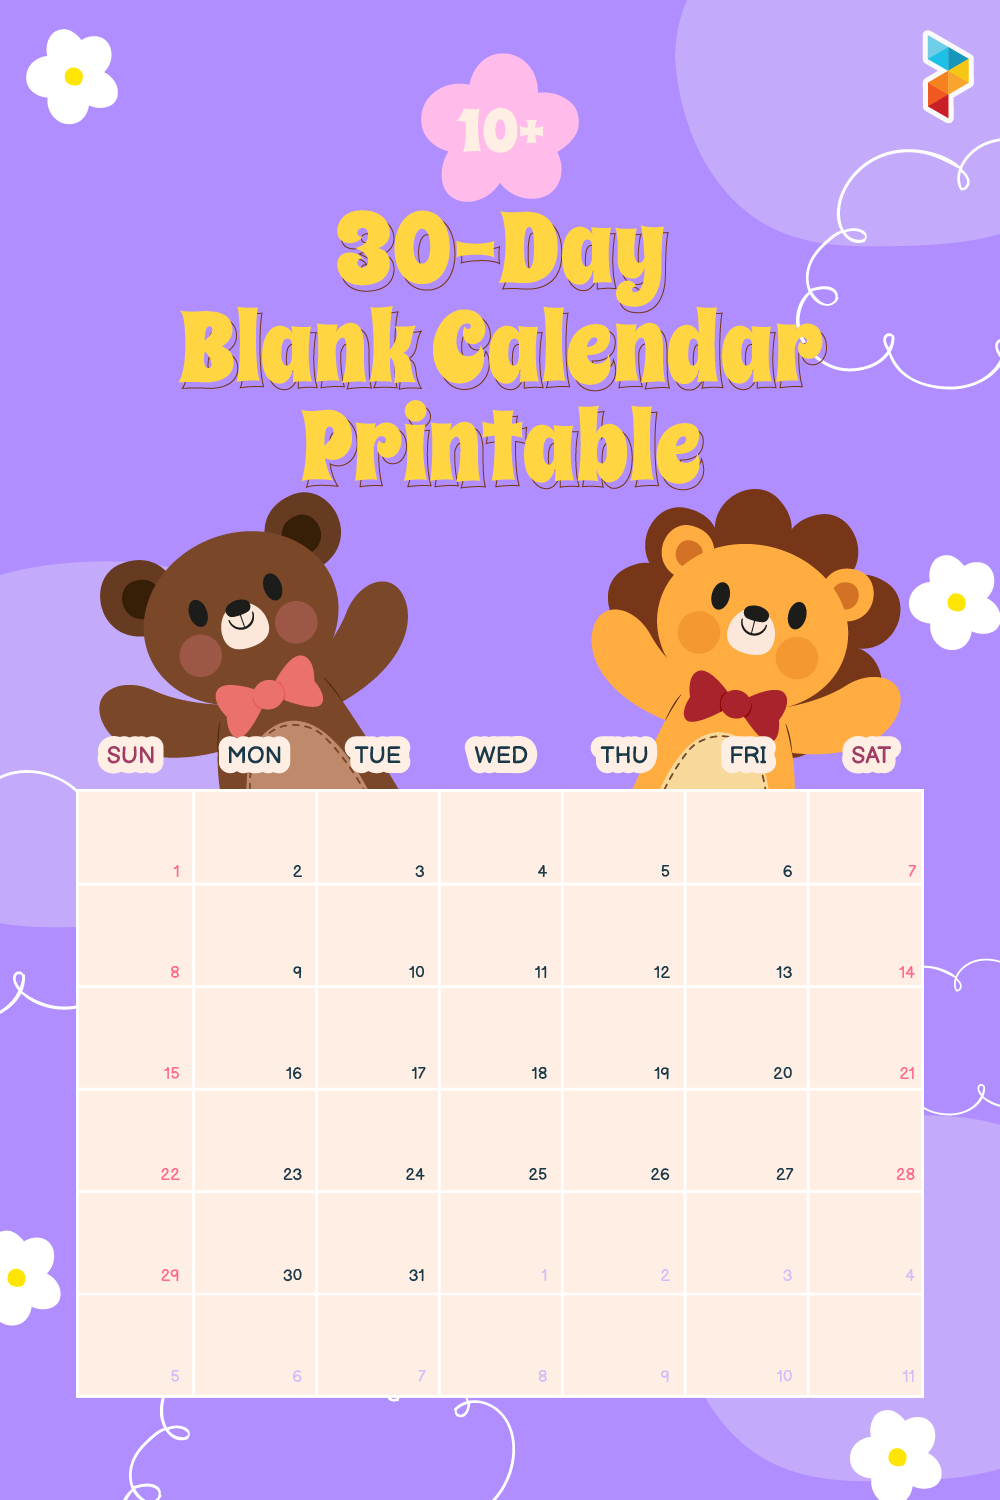 30-Day Blank Calendar